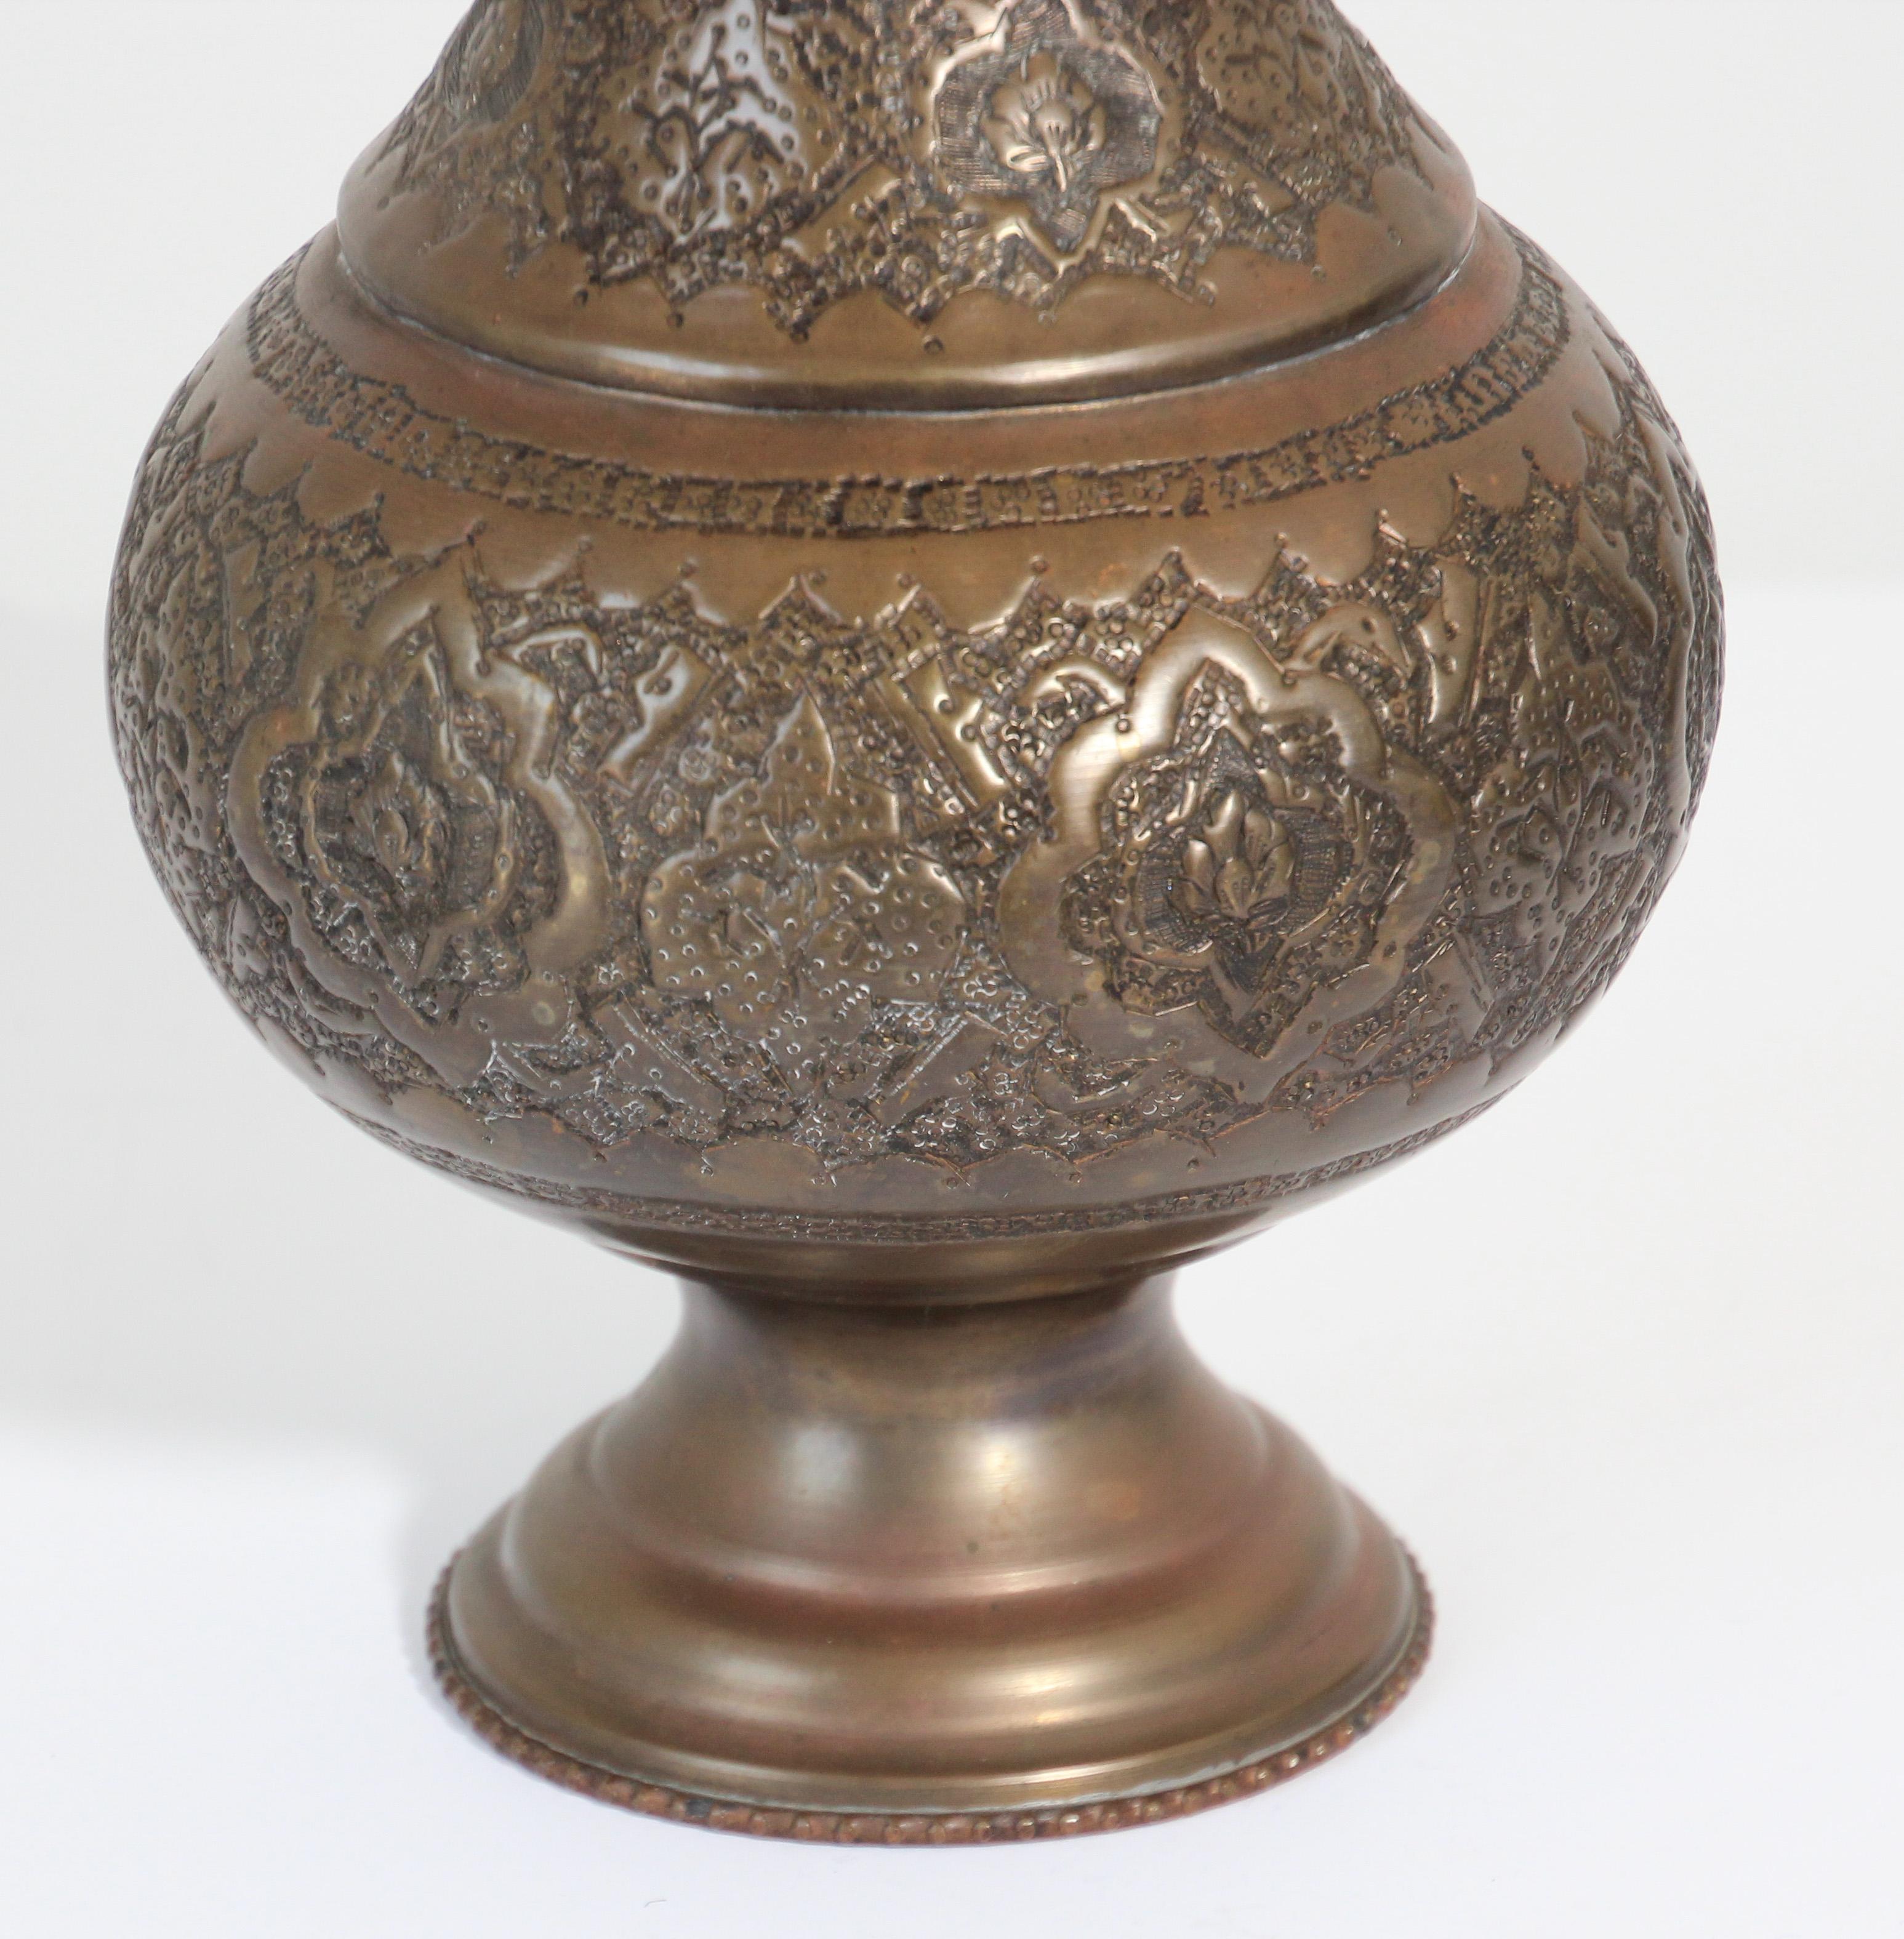 middle eastern vases